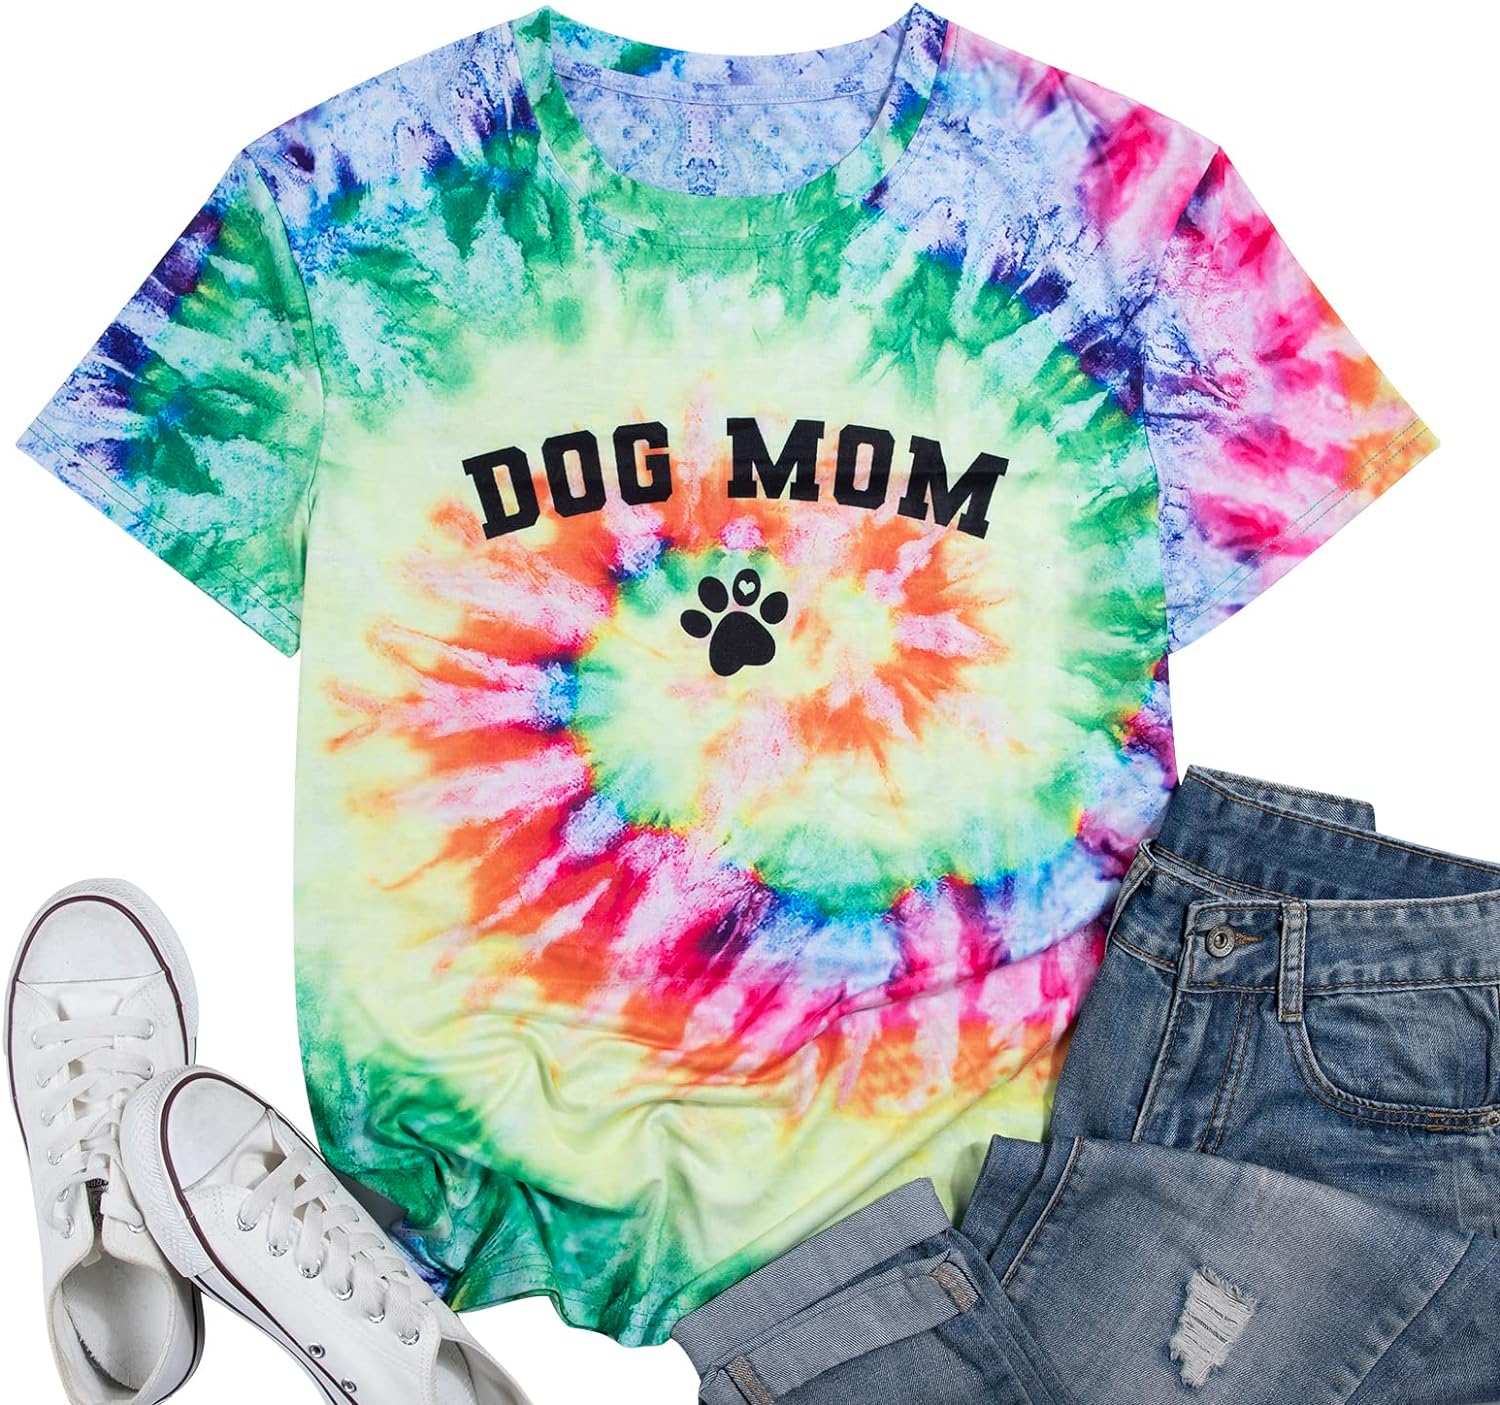 Rockin' The Dog Mom Aunt Life Tshirt Women' Cute Dog Lovers Shirts Short Sleeve Dog Mama T-Shirt Tees Tops